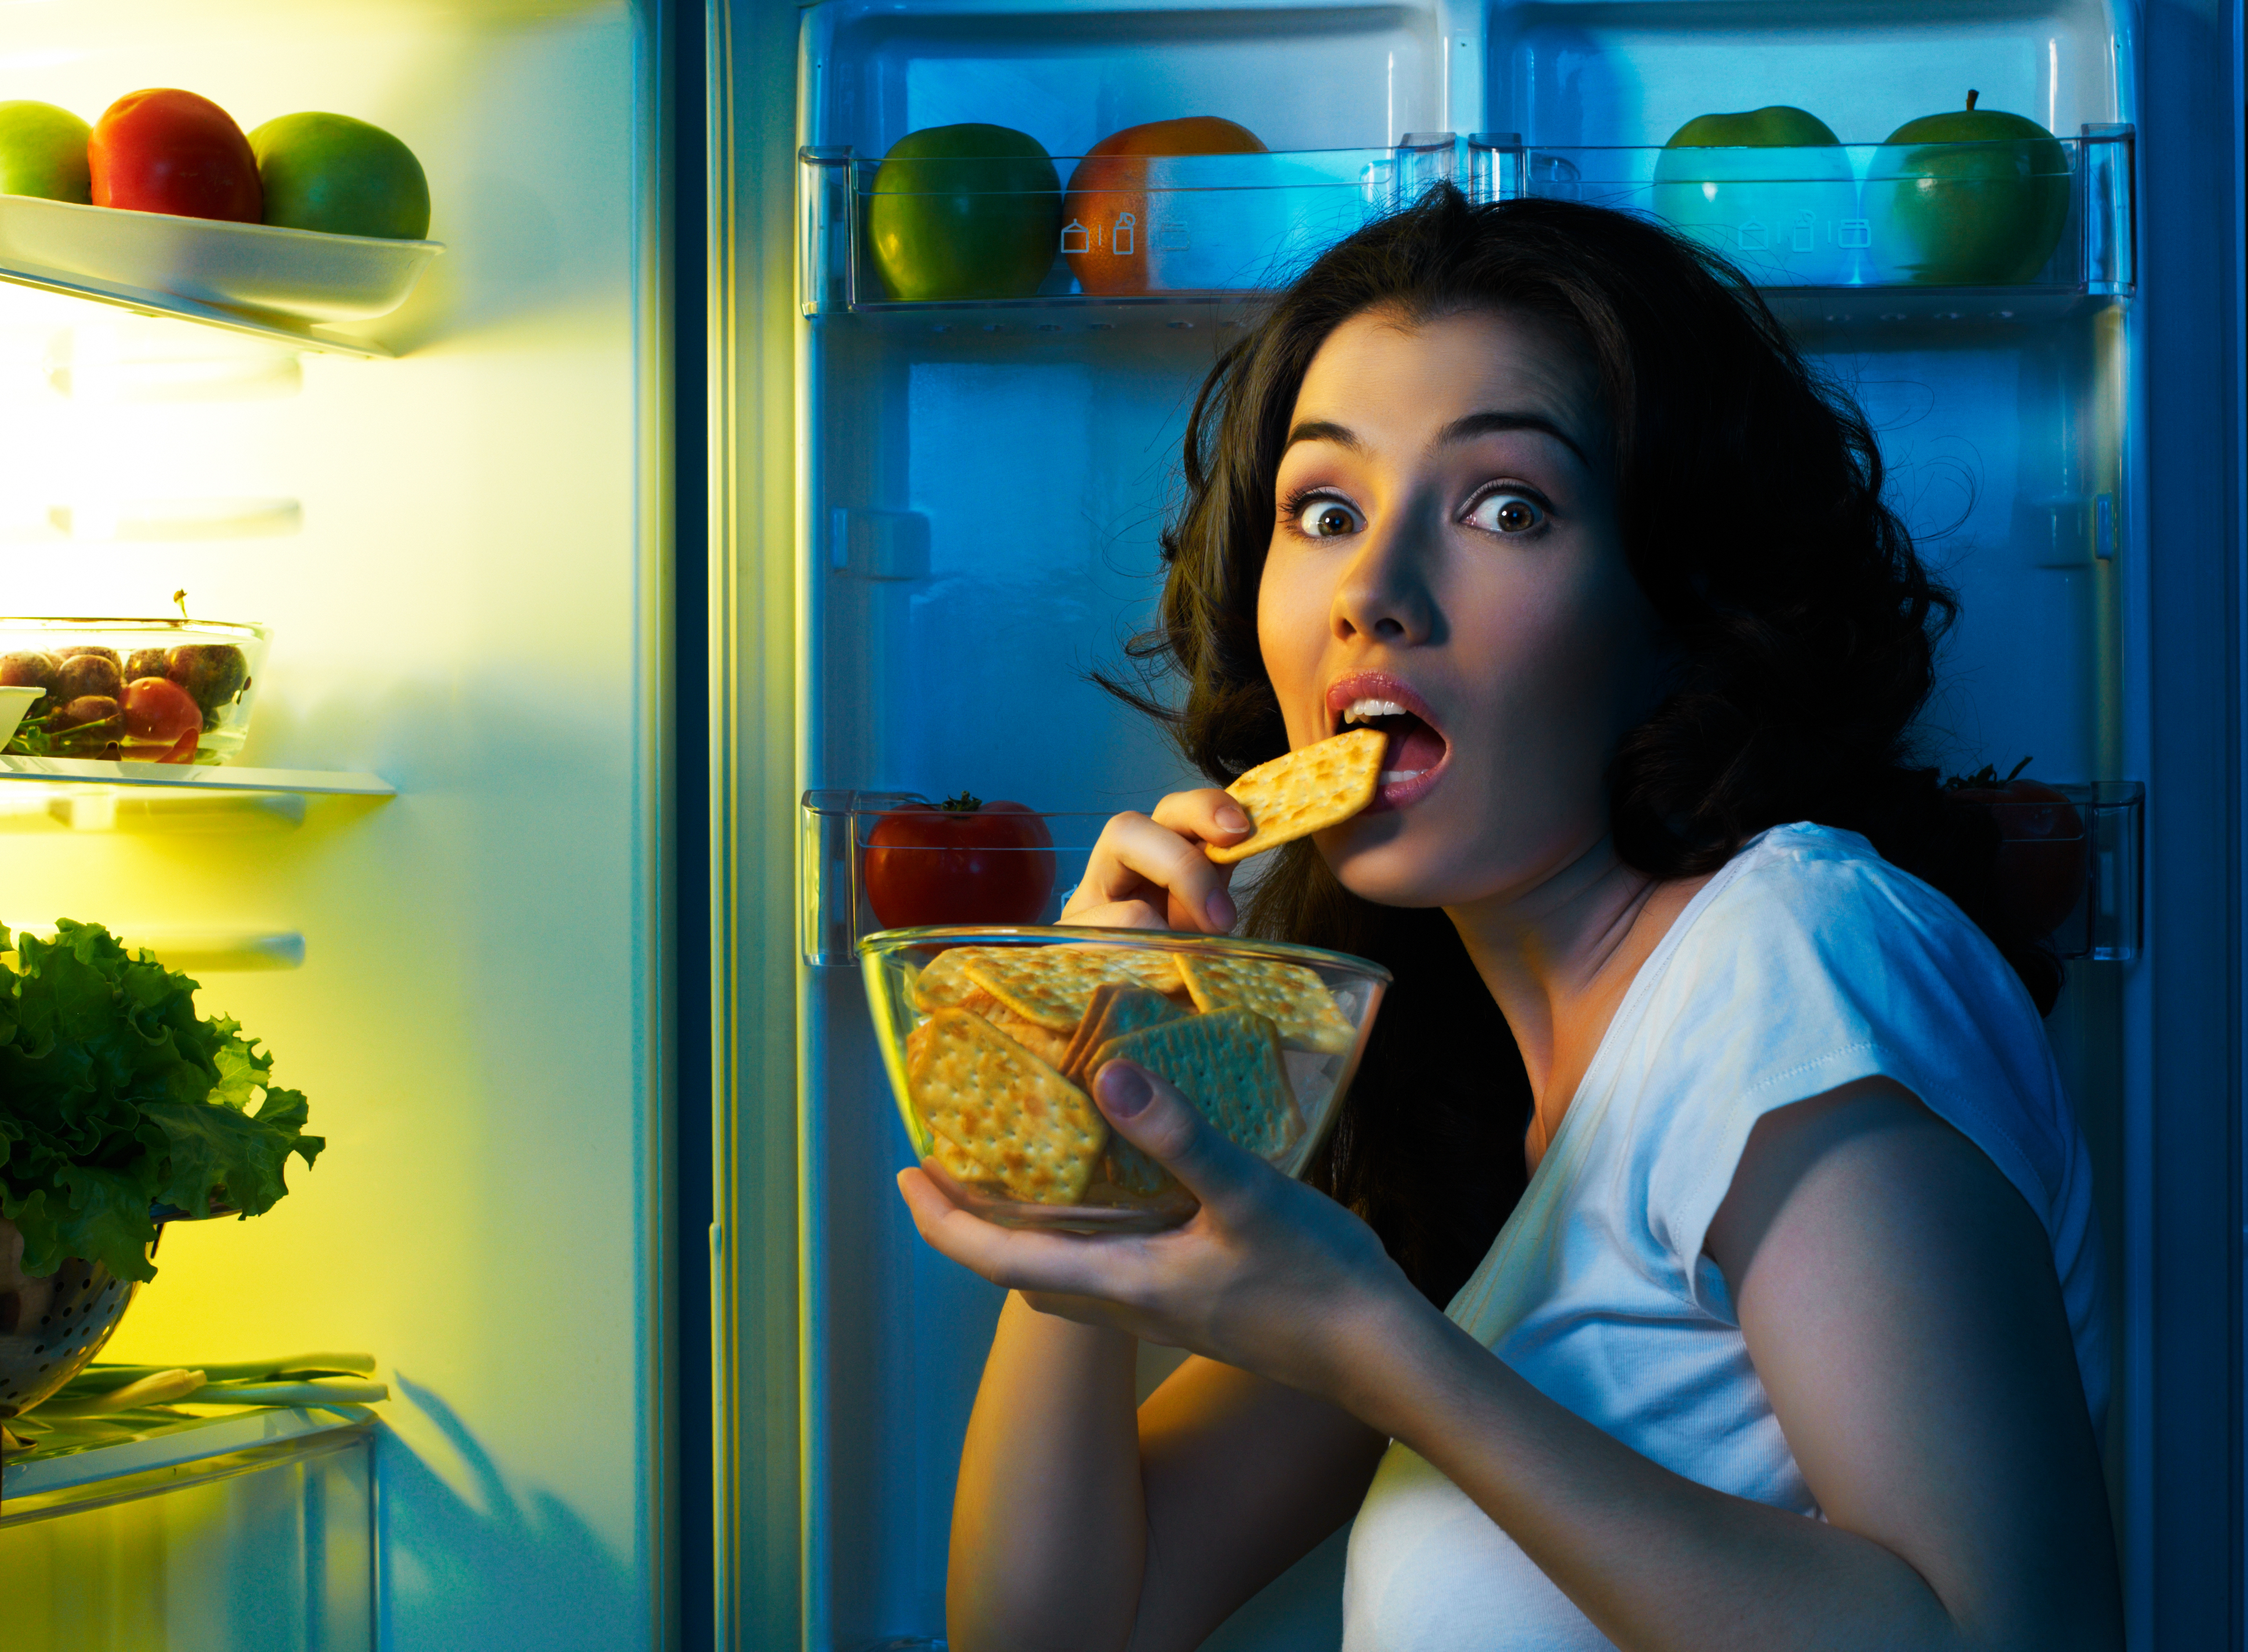 Woman eating crackers in fridge